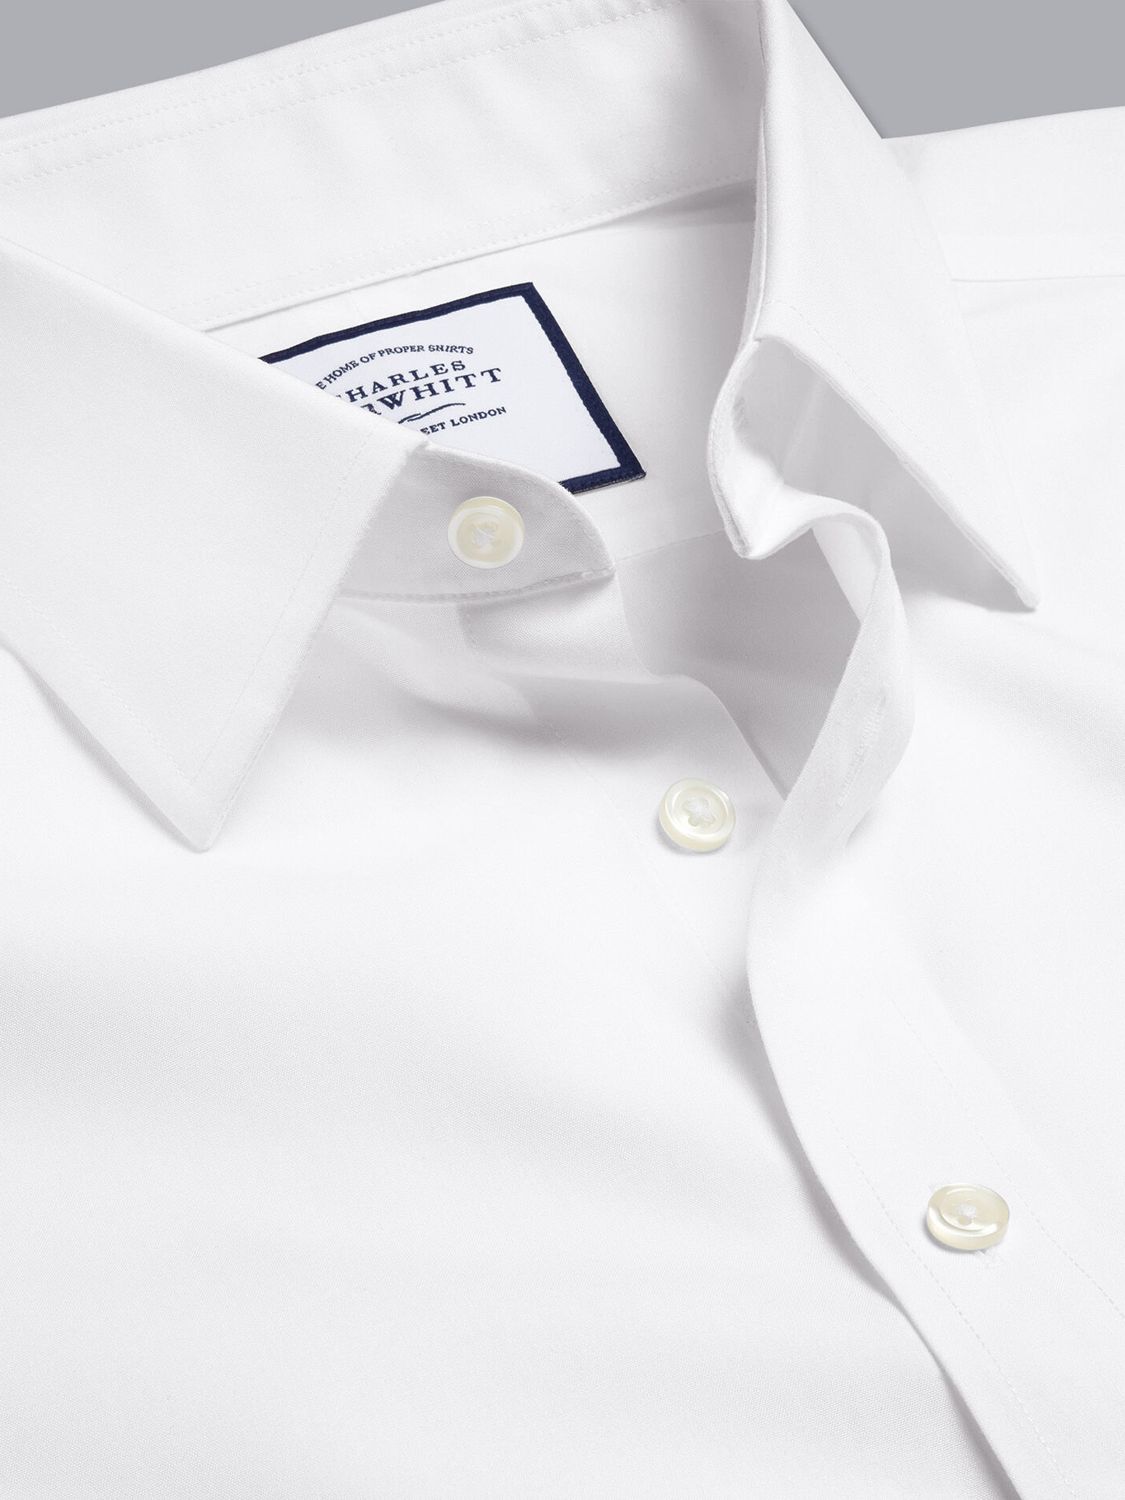 Charles Tyrwhitt Non-Iron Cotton Poplin Shirt, White, 16 34